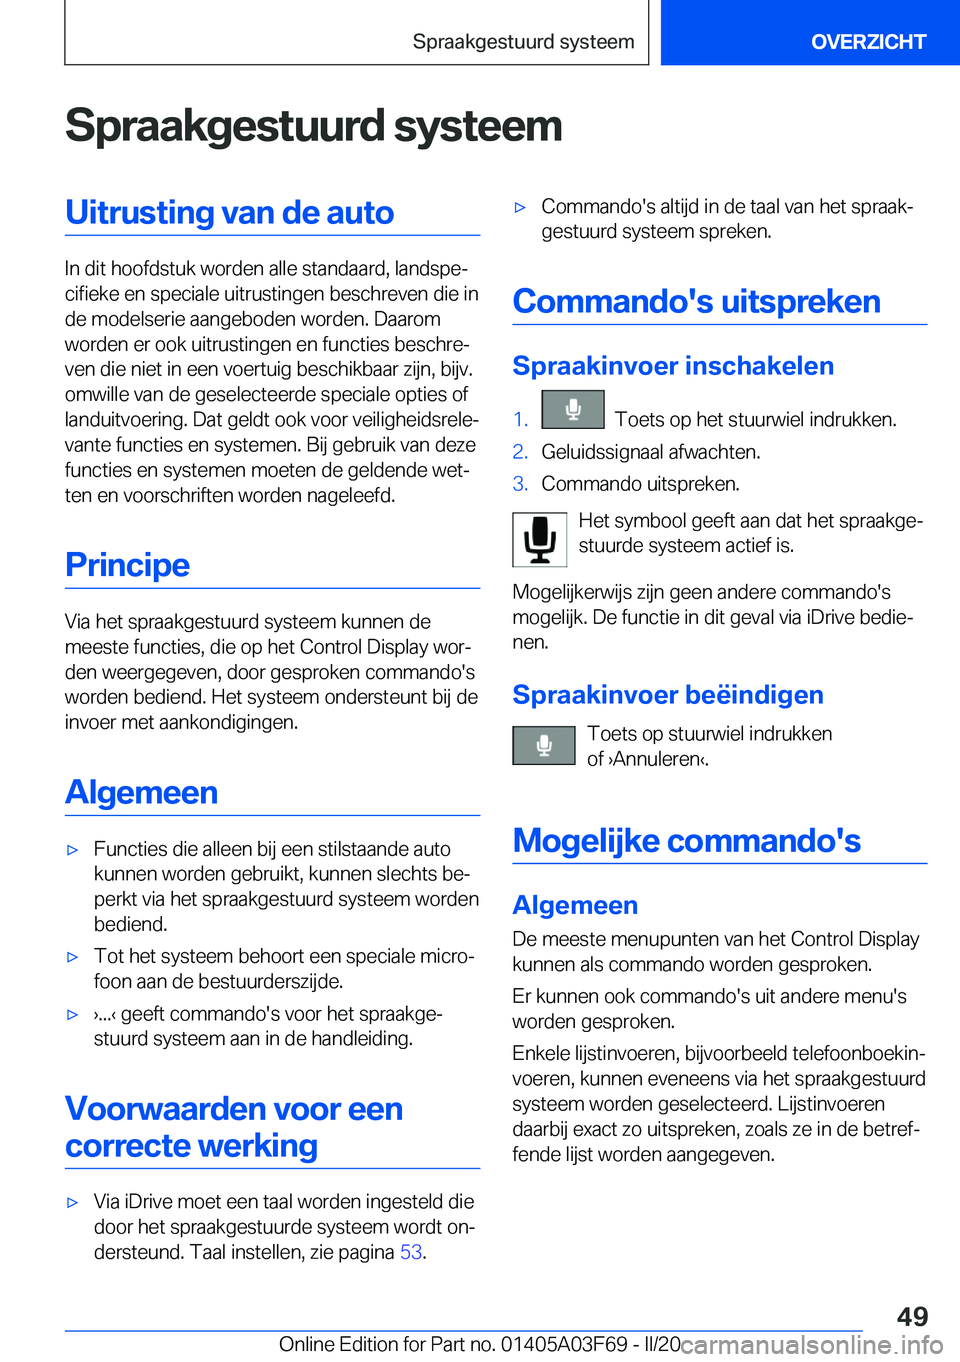 BMW 3 SERIES 2020  Instructieboekjes (in Dutch) �S�p�r�a�a�k�g�e�s�t�u�u�r�d��s�y�s�t�e�e�m�U�i�t�r�u�s�t�i�n�g��v�a�n��d�e��a�u�t�o
�I�n��d�i�t��h�o�o�f�d�s�t�u�k��w�o�r�d�e�n��a�l�l�e��s�t�a�n�d�a�a�r�d�,��l�a�n�d�s�p�ej�c�i�f�i�e�k�e�